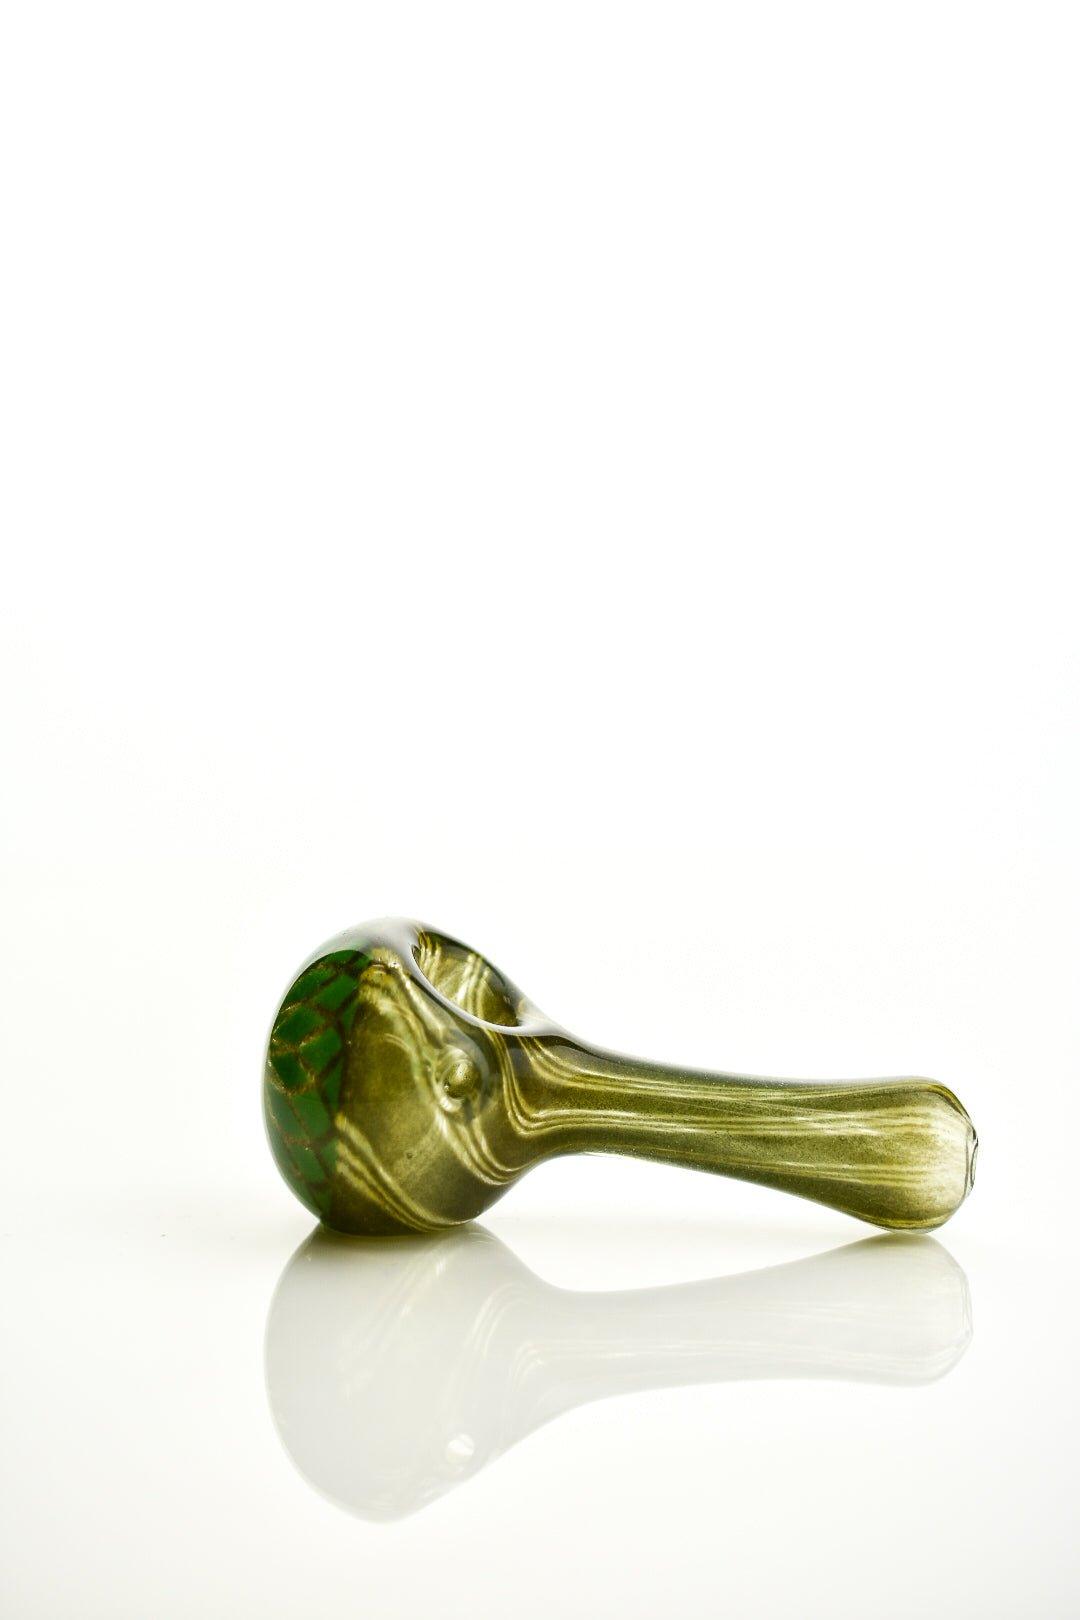 Hoffman Glass Reticello Green - Smoke Spot Smoke Shop